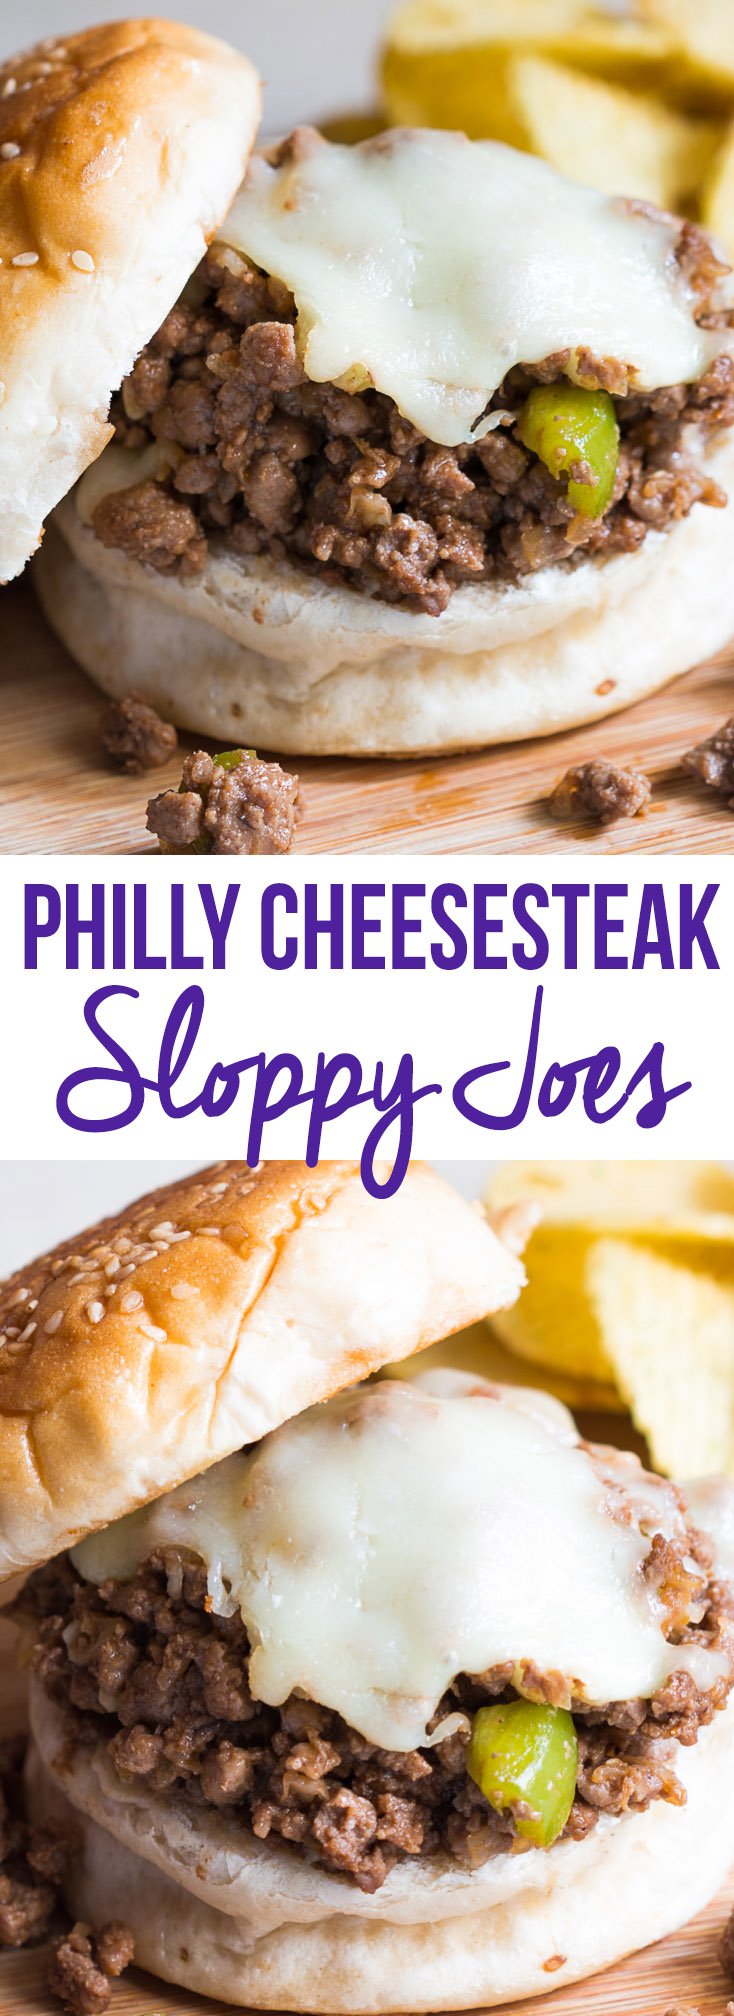 philly cheesesteak sloppy joes pin